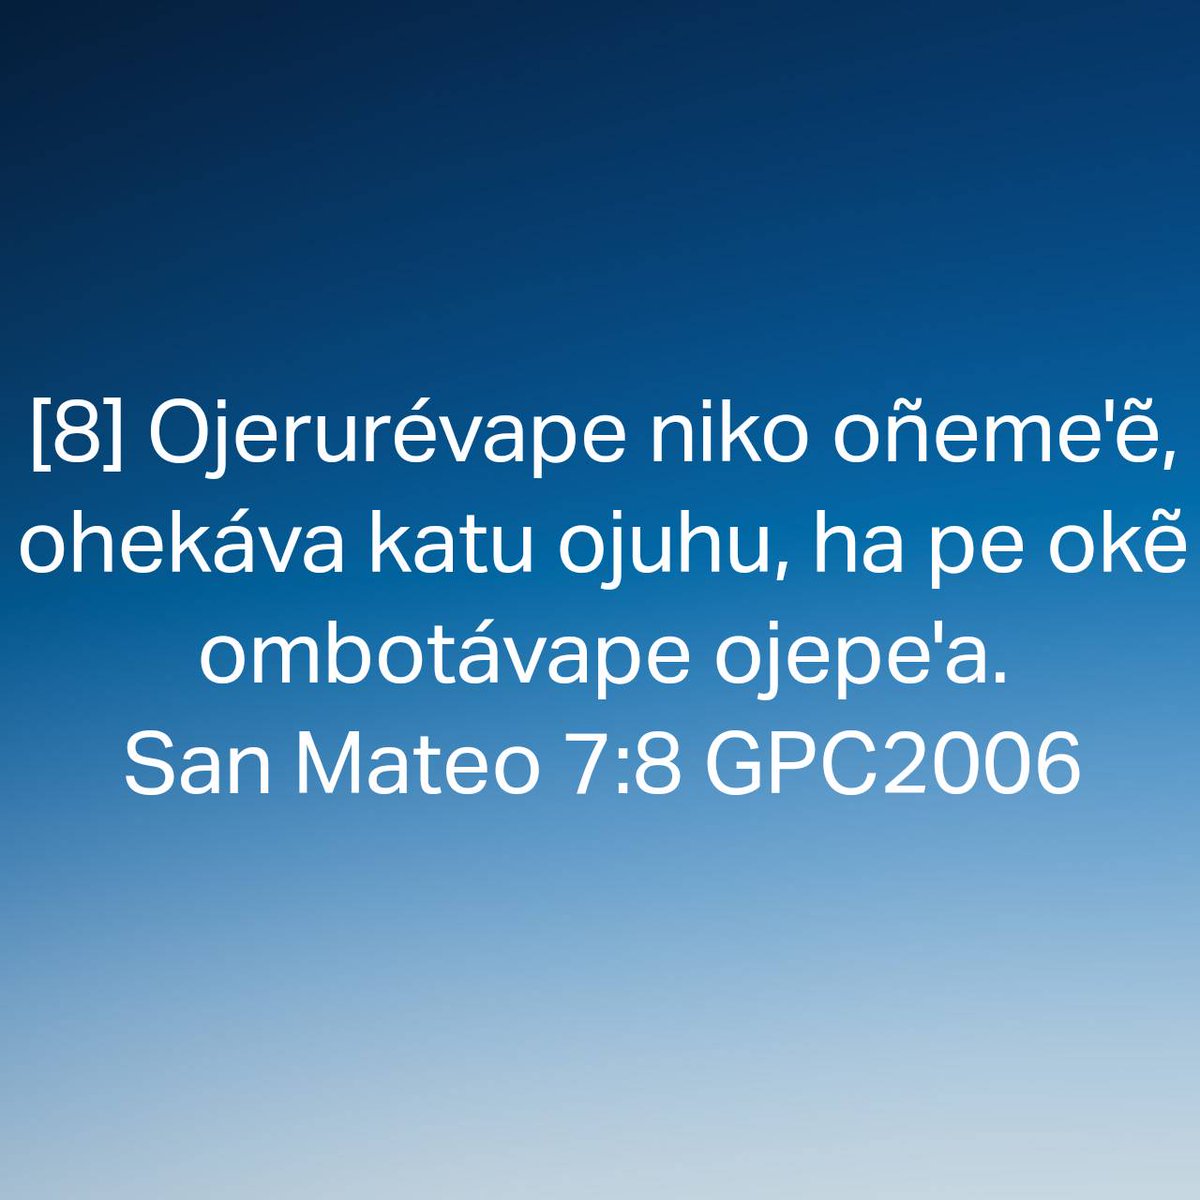 San Mateo 7:8 GPC2006
[8] Ojerurévape niko oñeme'ẽ, ohekáva katu ojuhu, ha pe okẽ ombotávape ojepe'a.

bible.com/bible/66/mat.7…